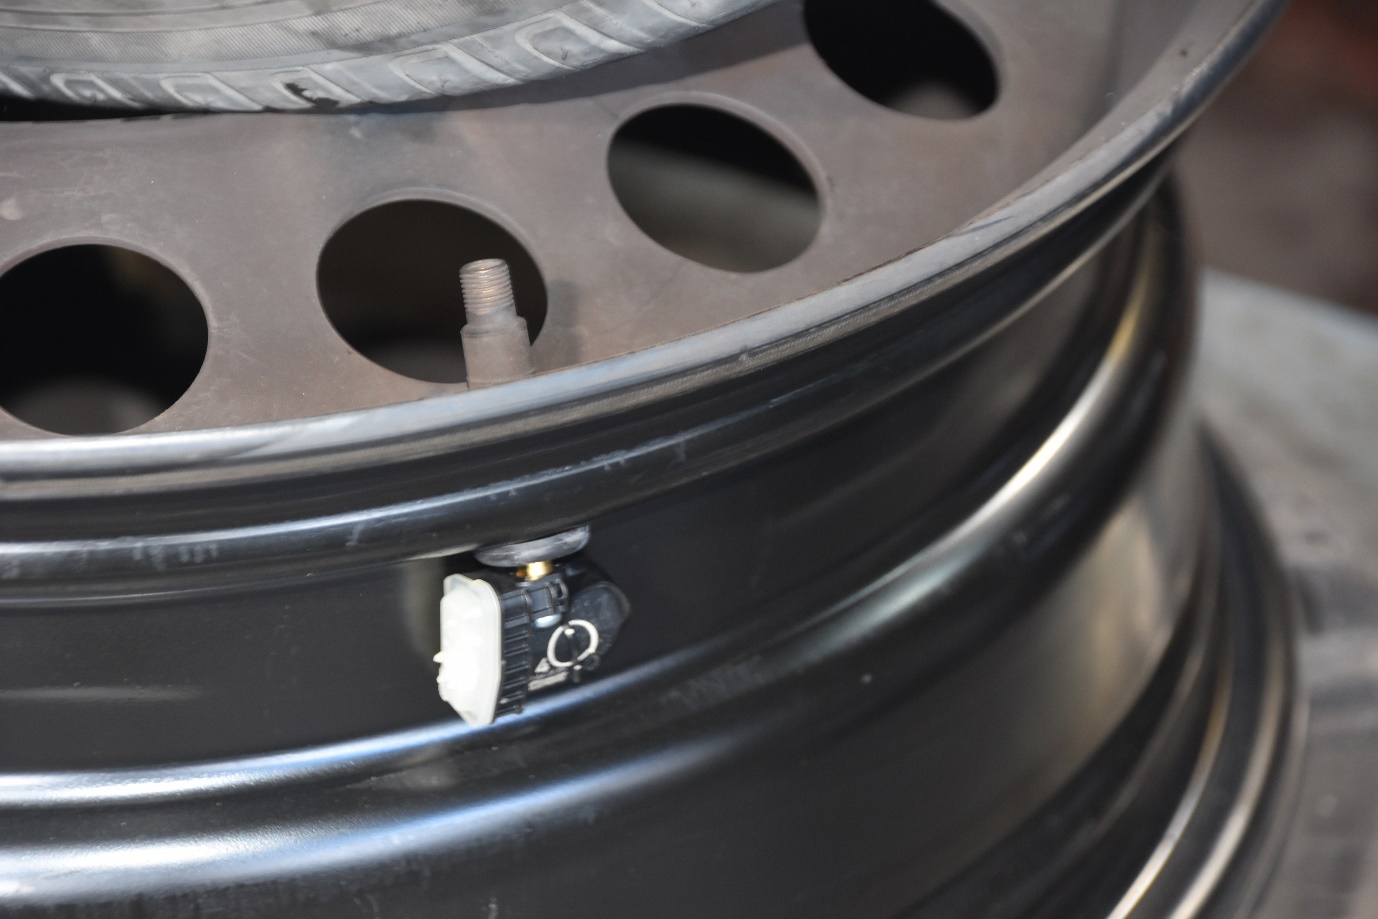 Where Are Tyre Pressure Sensors?